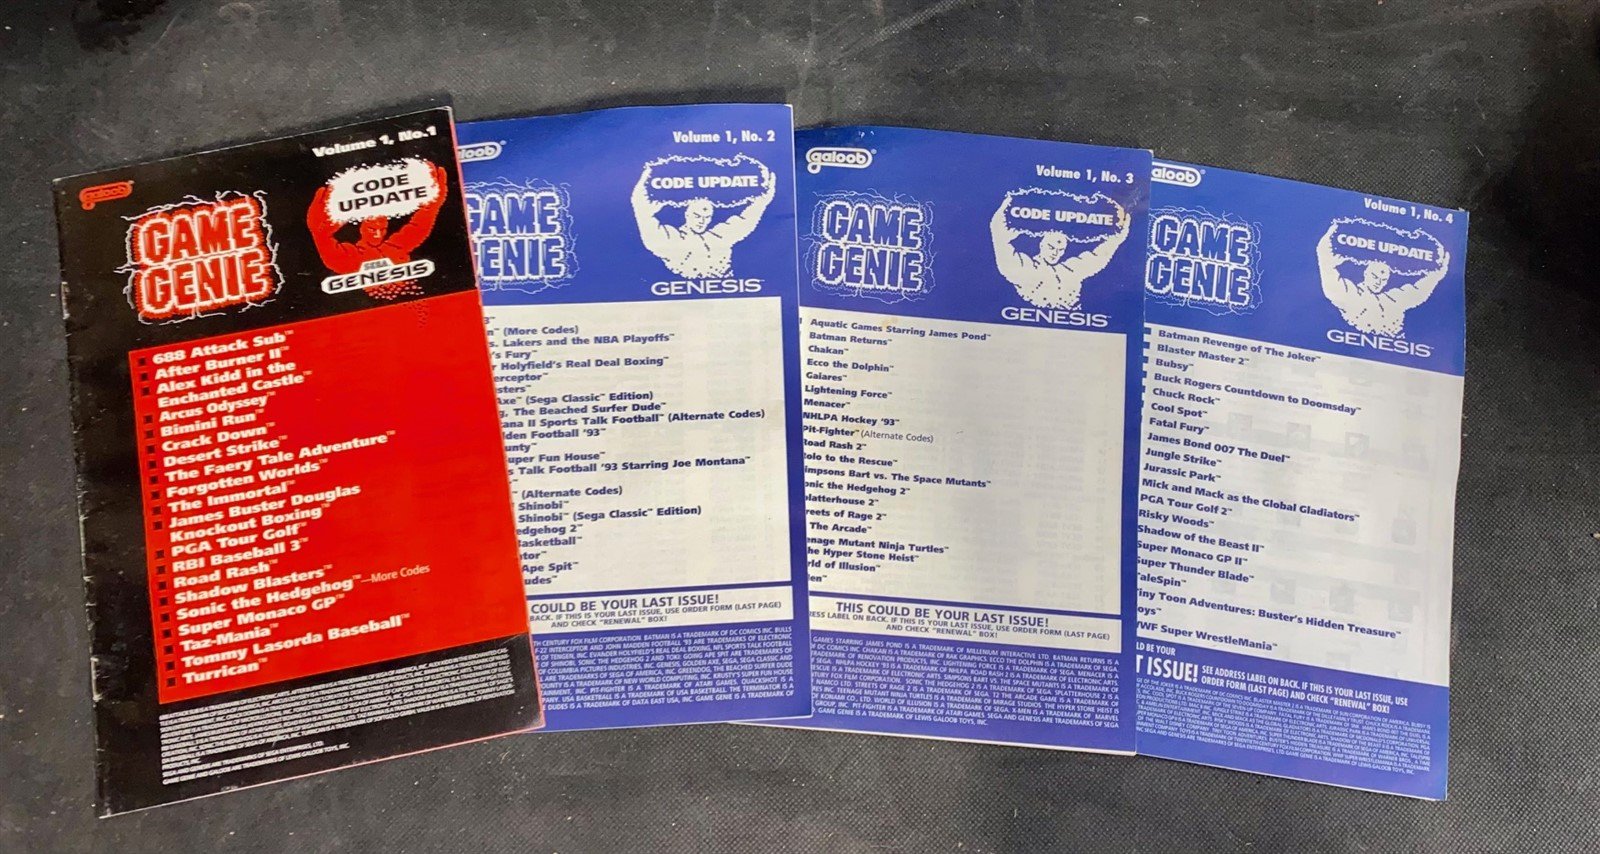 Original Sega Genesis Game Genie w/ 7 Code Updater Manuals